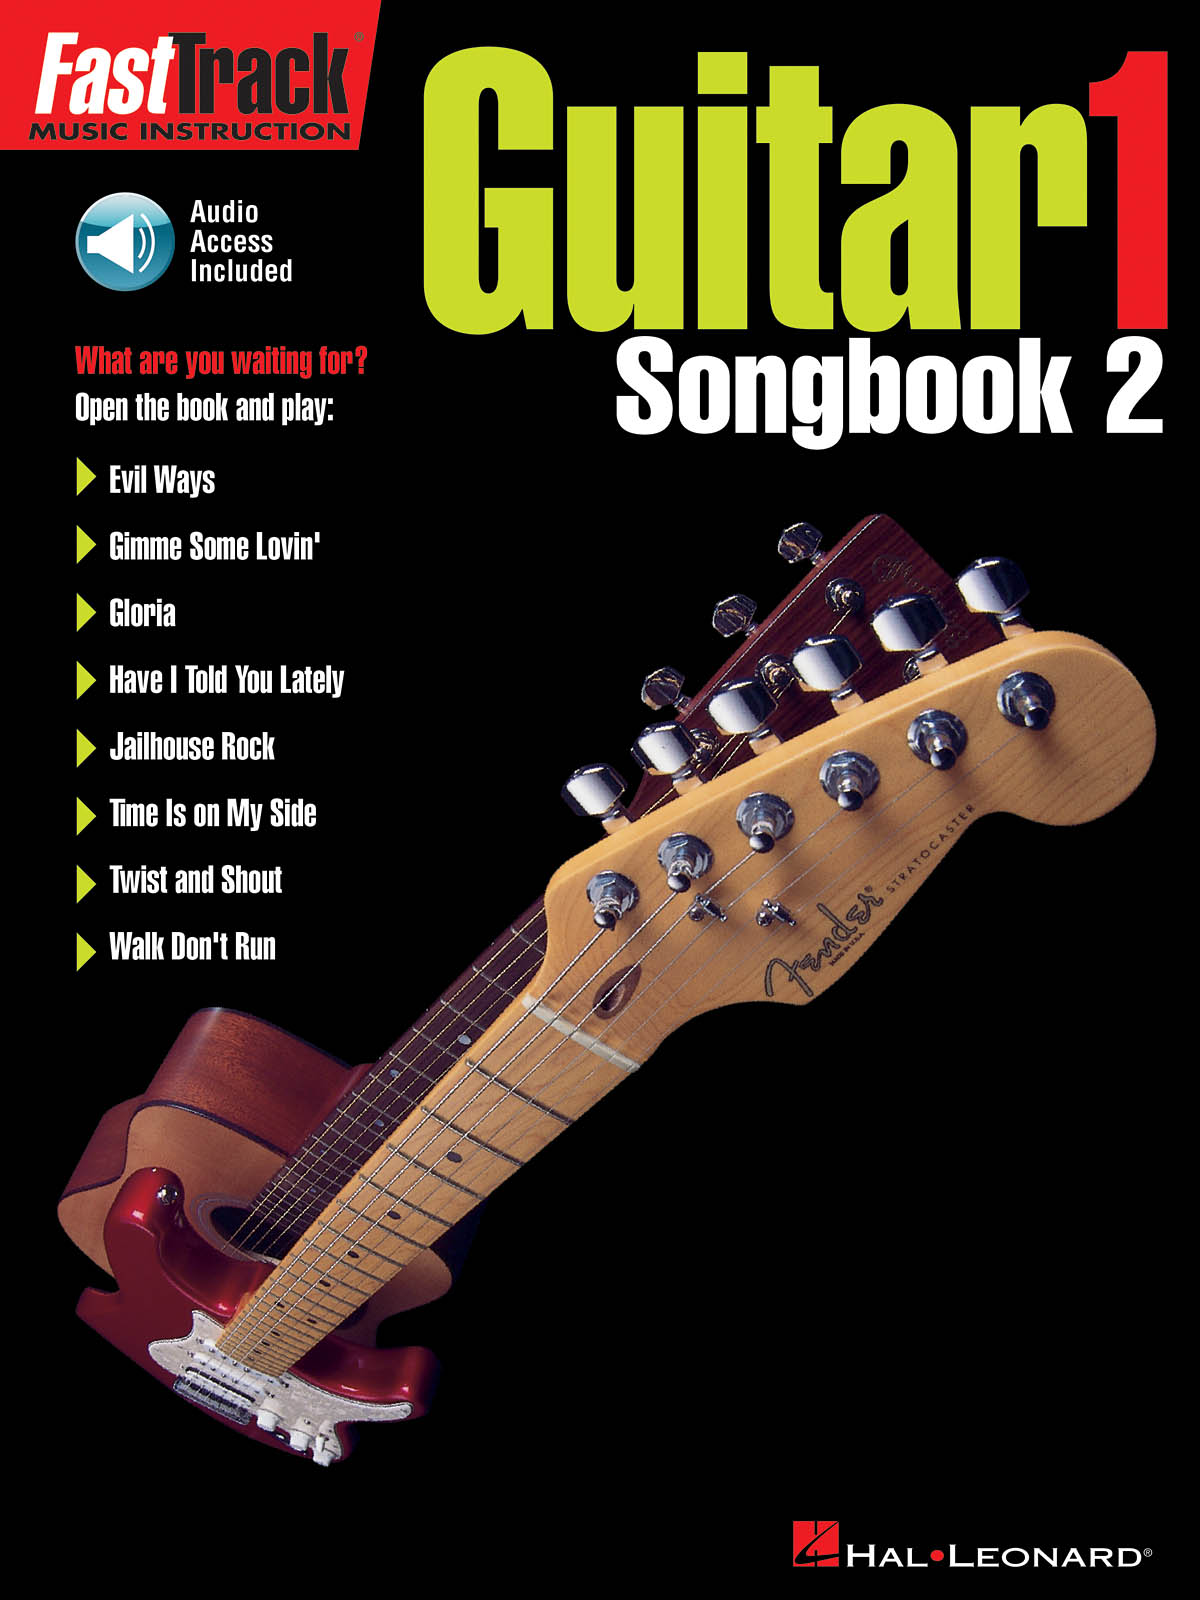 FastTrack - Guitar 1 - Songbook 2